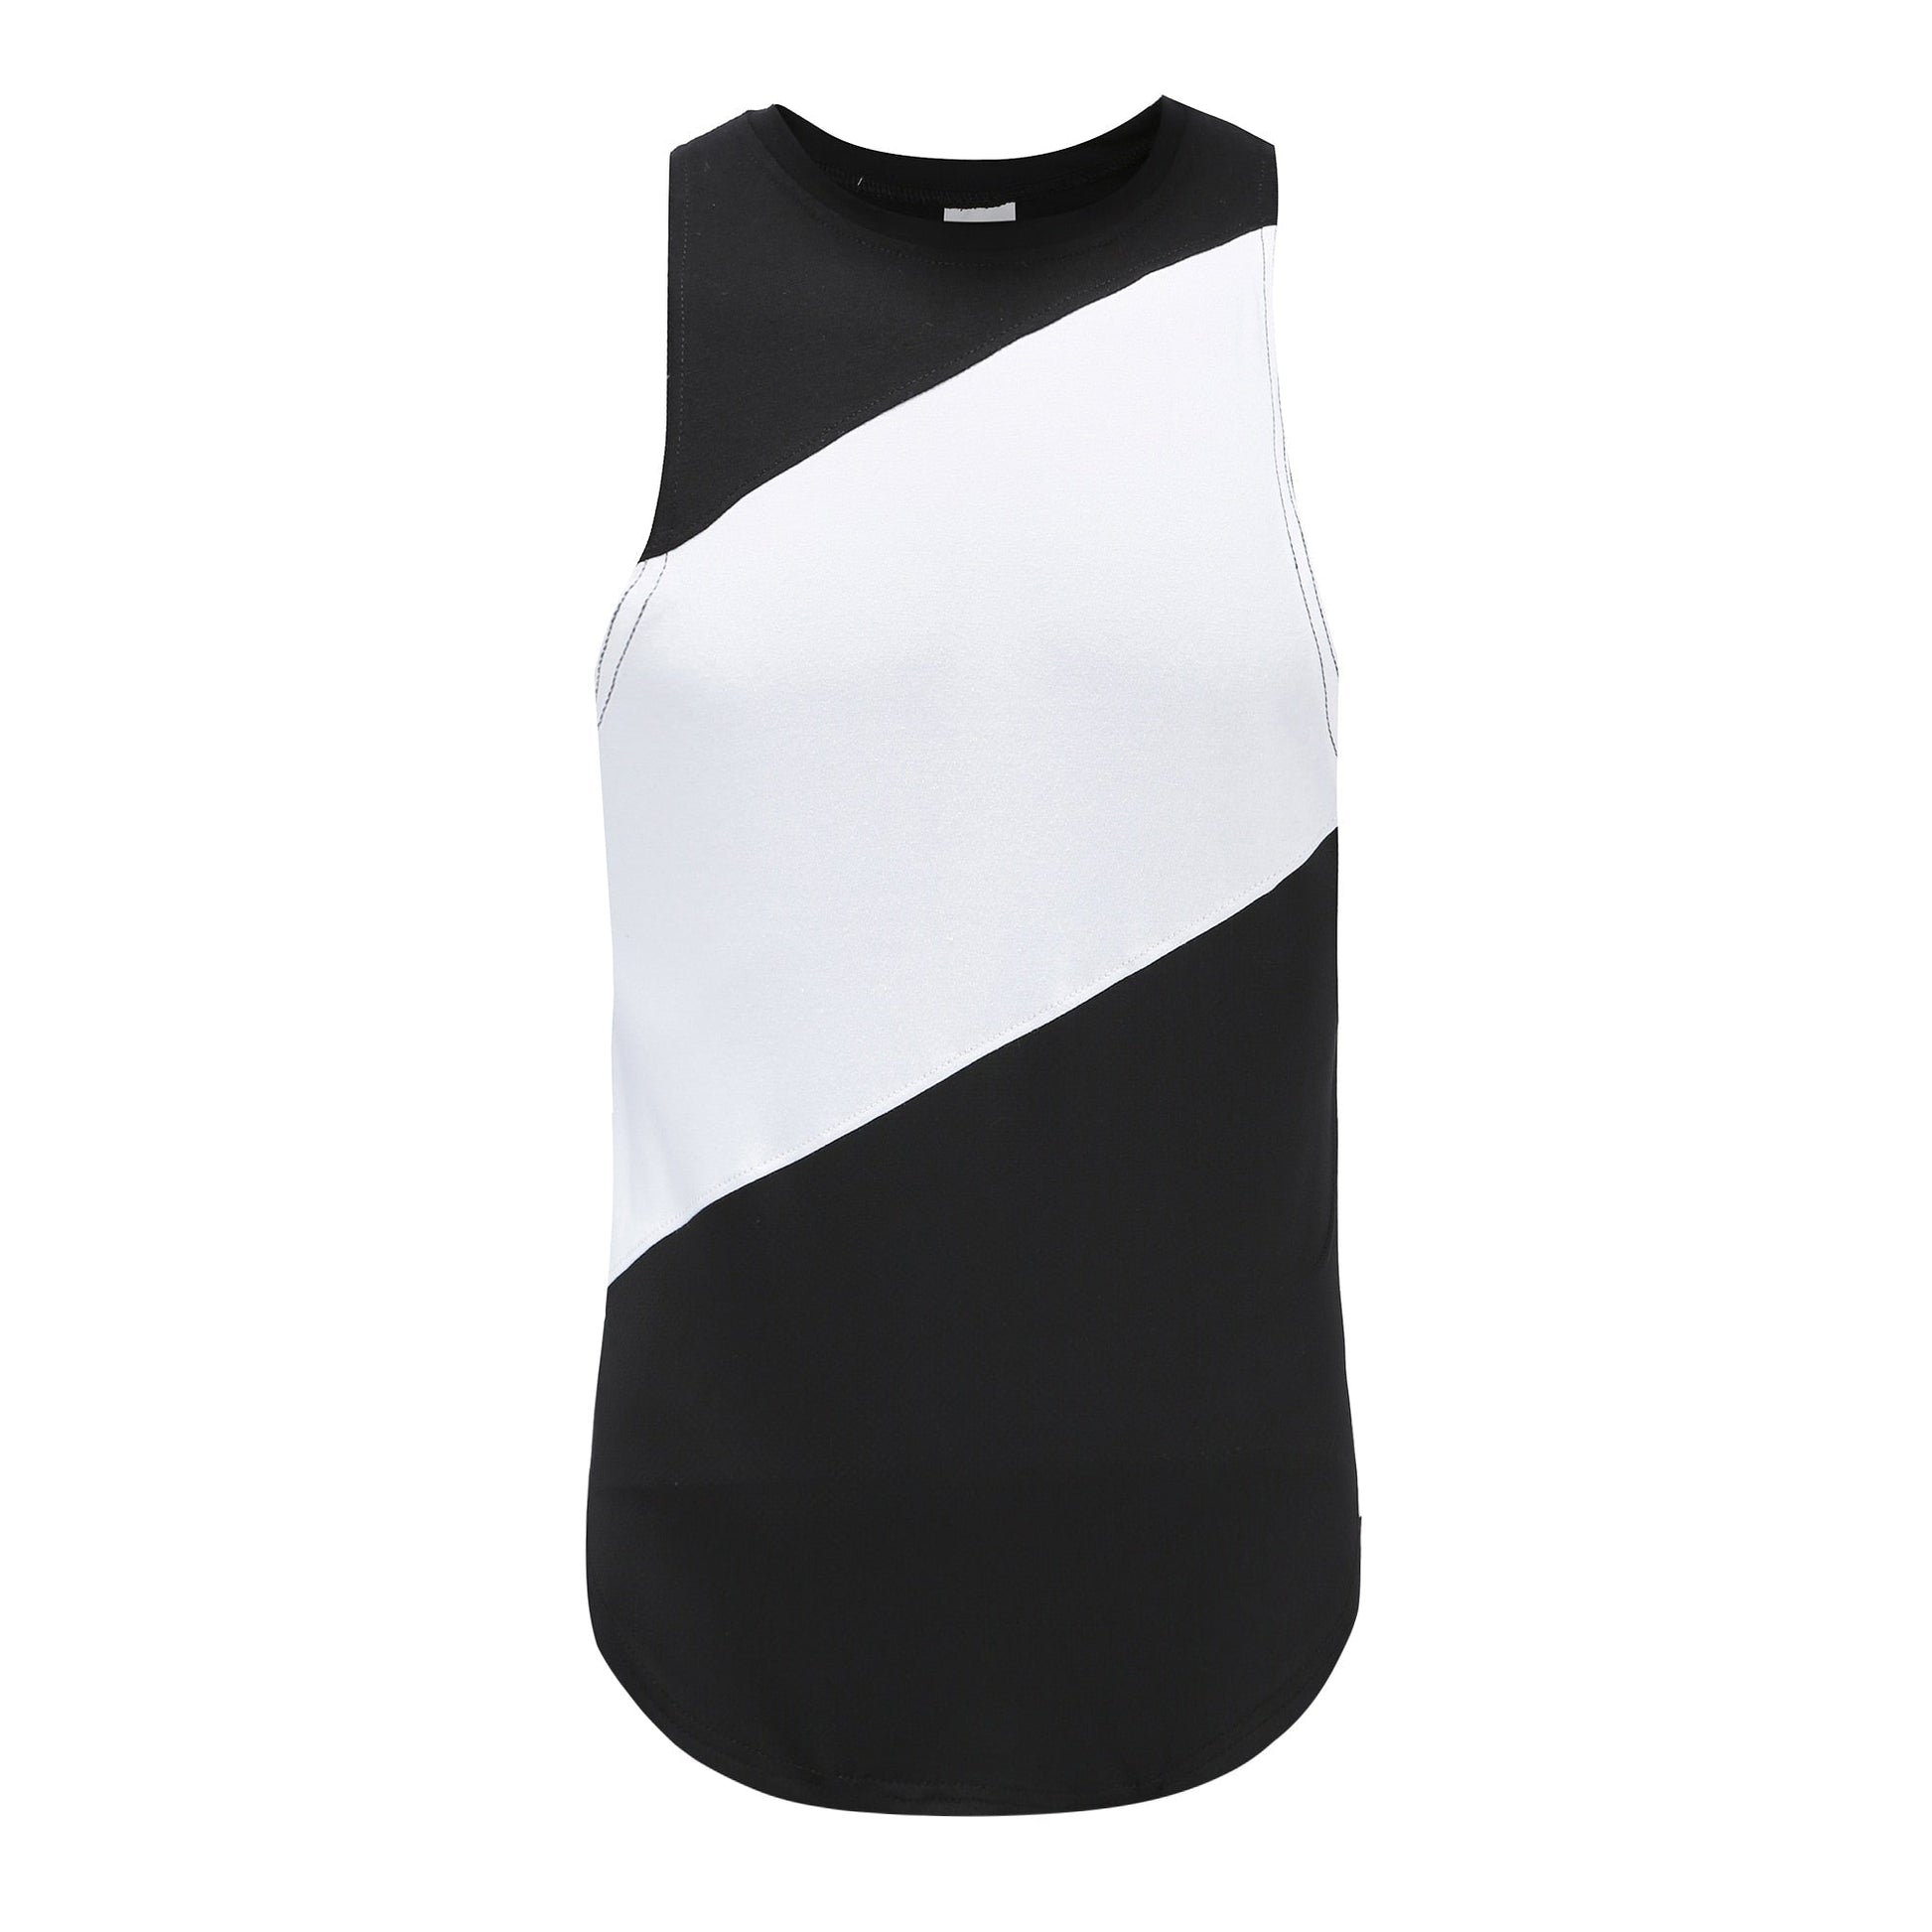 Bodybuilding sleeveless cotton shirt black white